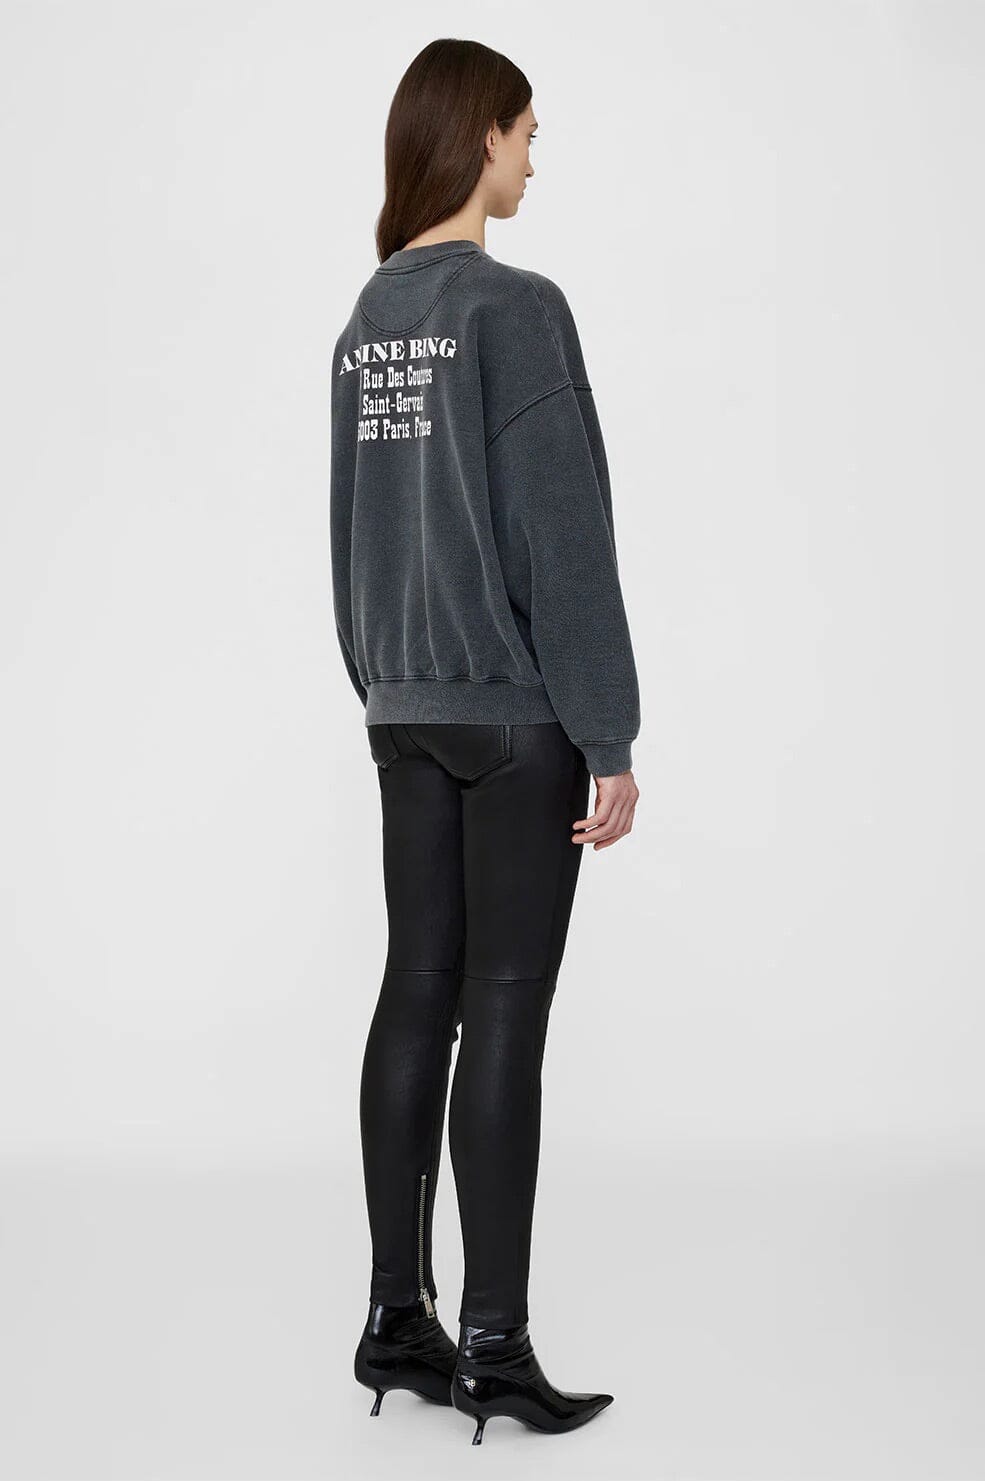 Anine Bing Jaci Sweatshirt Paris Washed Black Genser